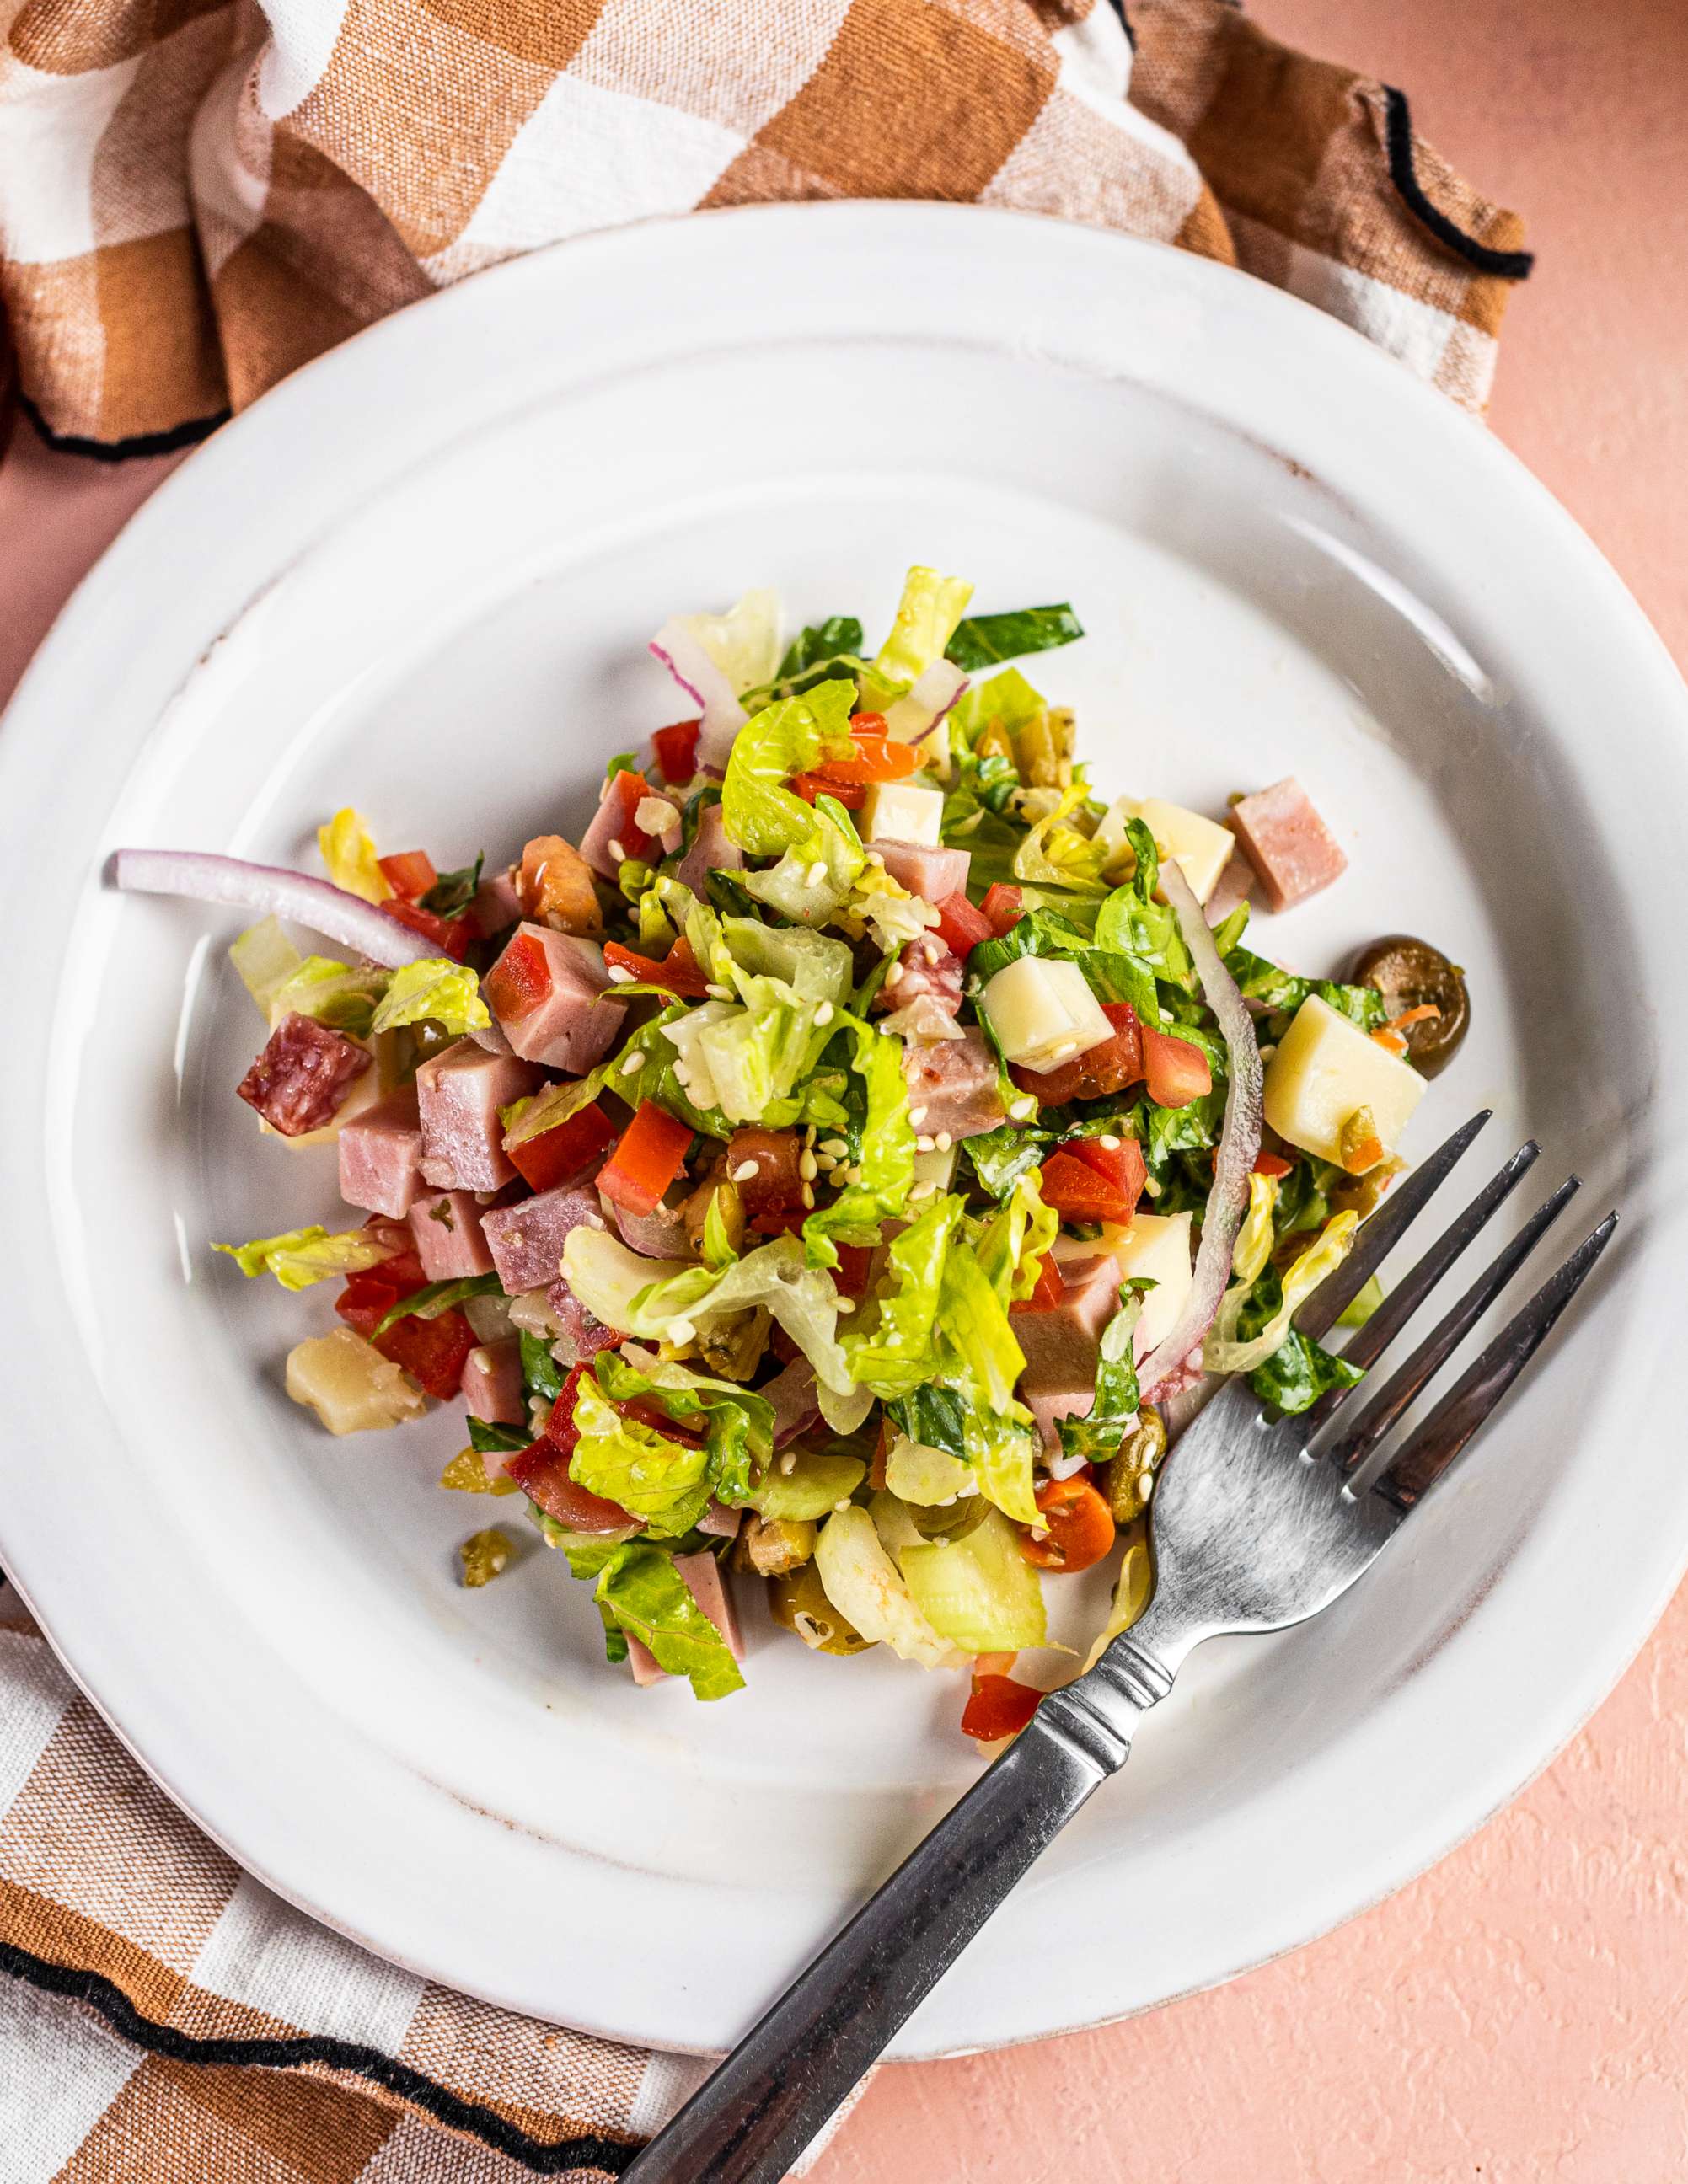 PHOTO: A muffuletta salad inspired by the beloved savory sandwich.